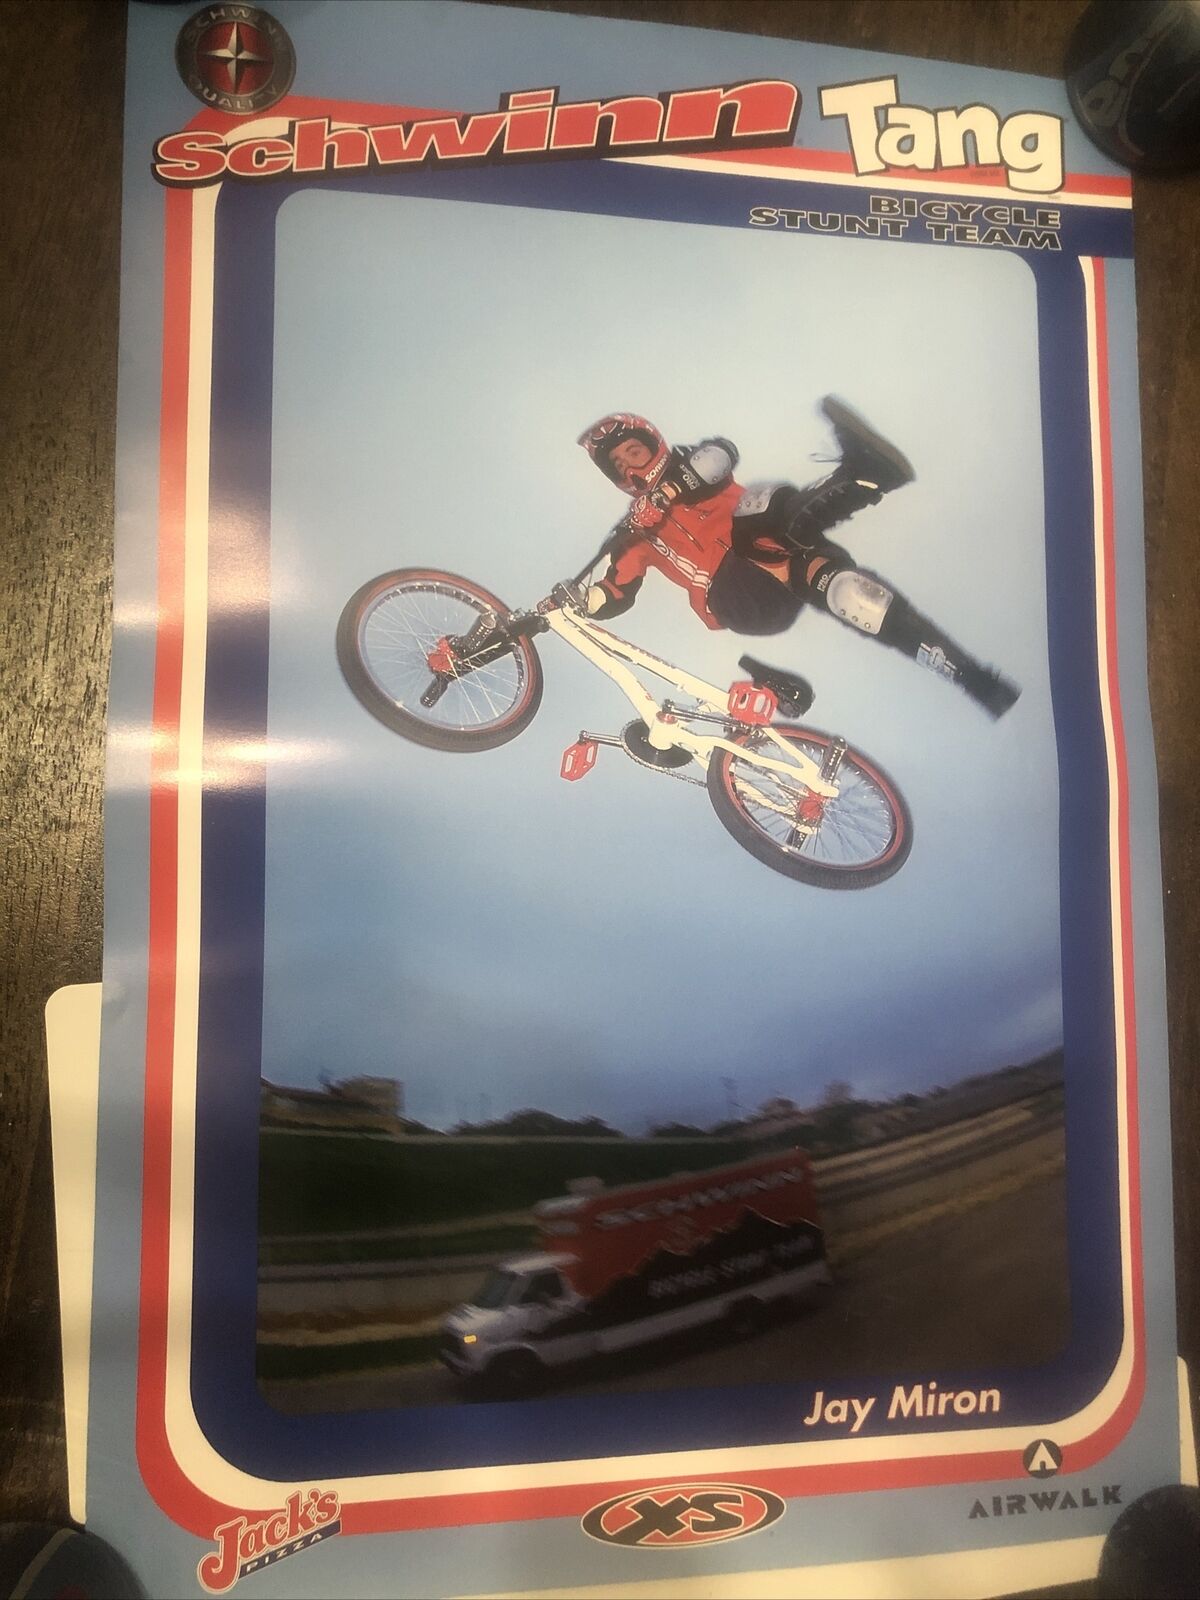 Schwinn Tang BMX Bicycle Stunt Team Poster